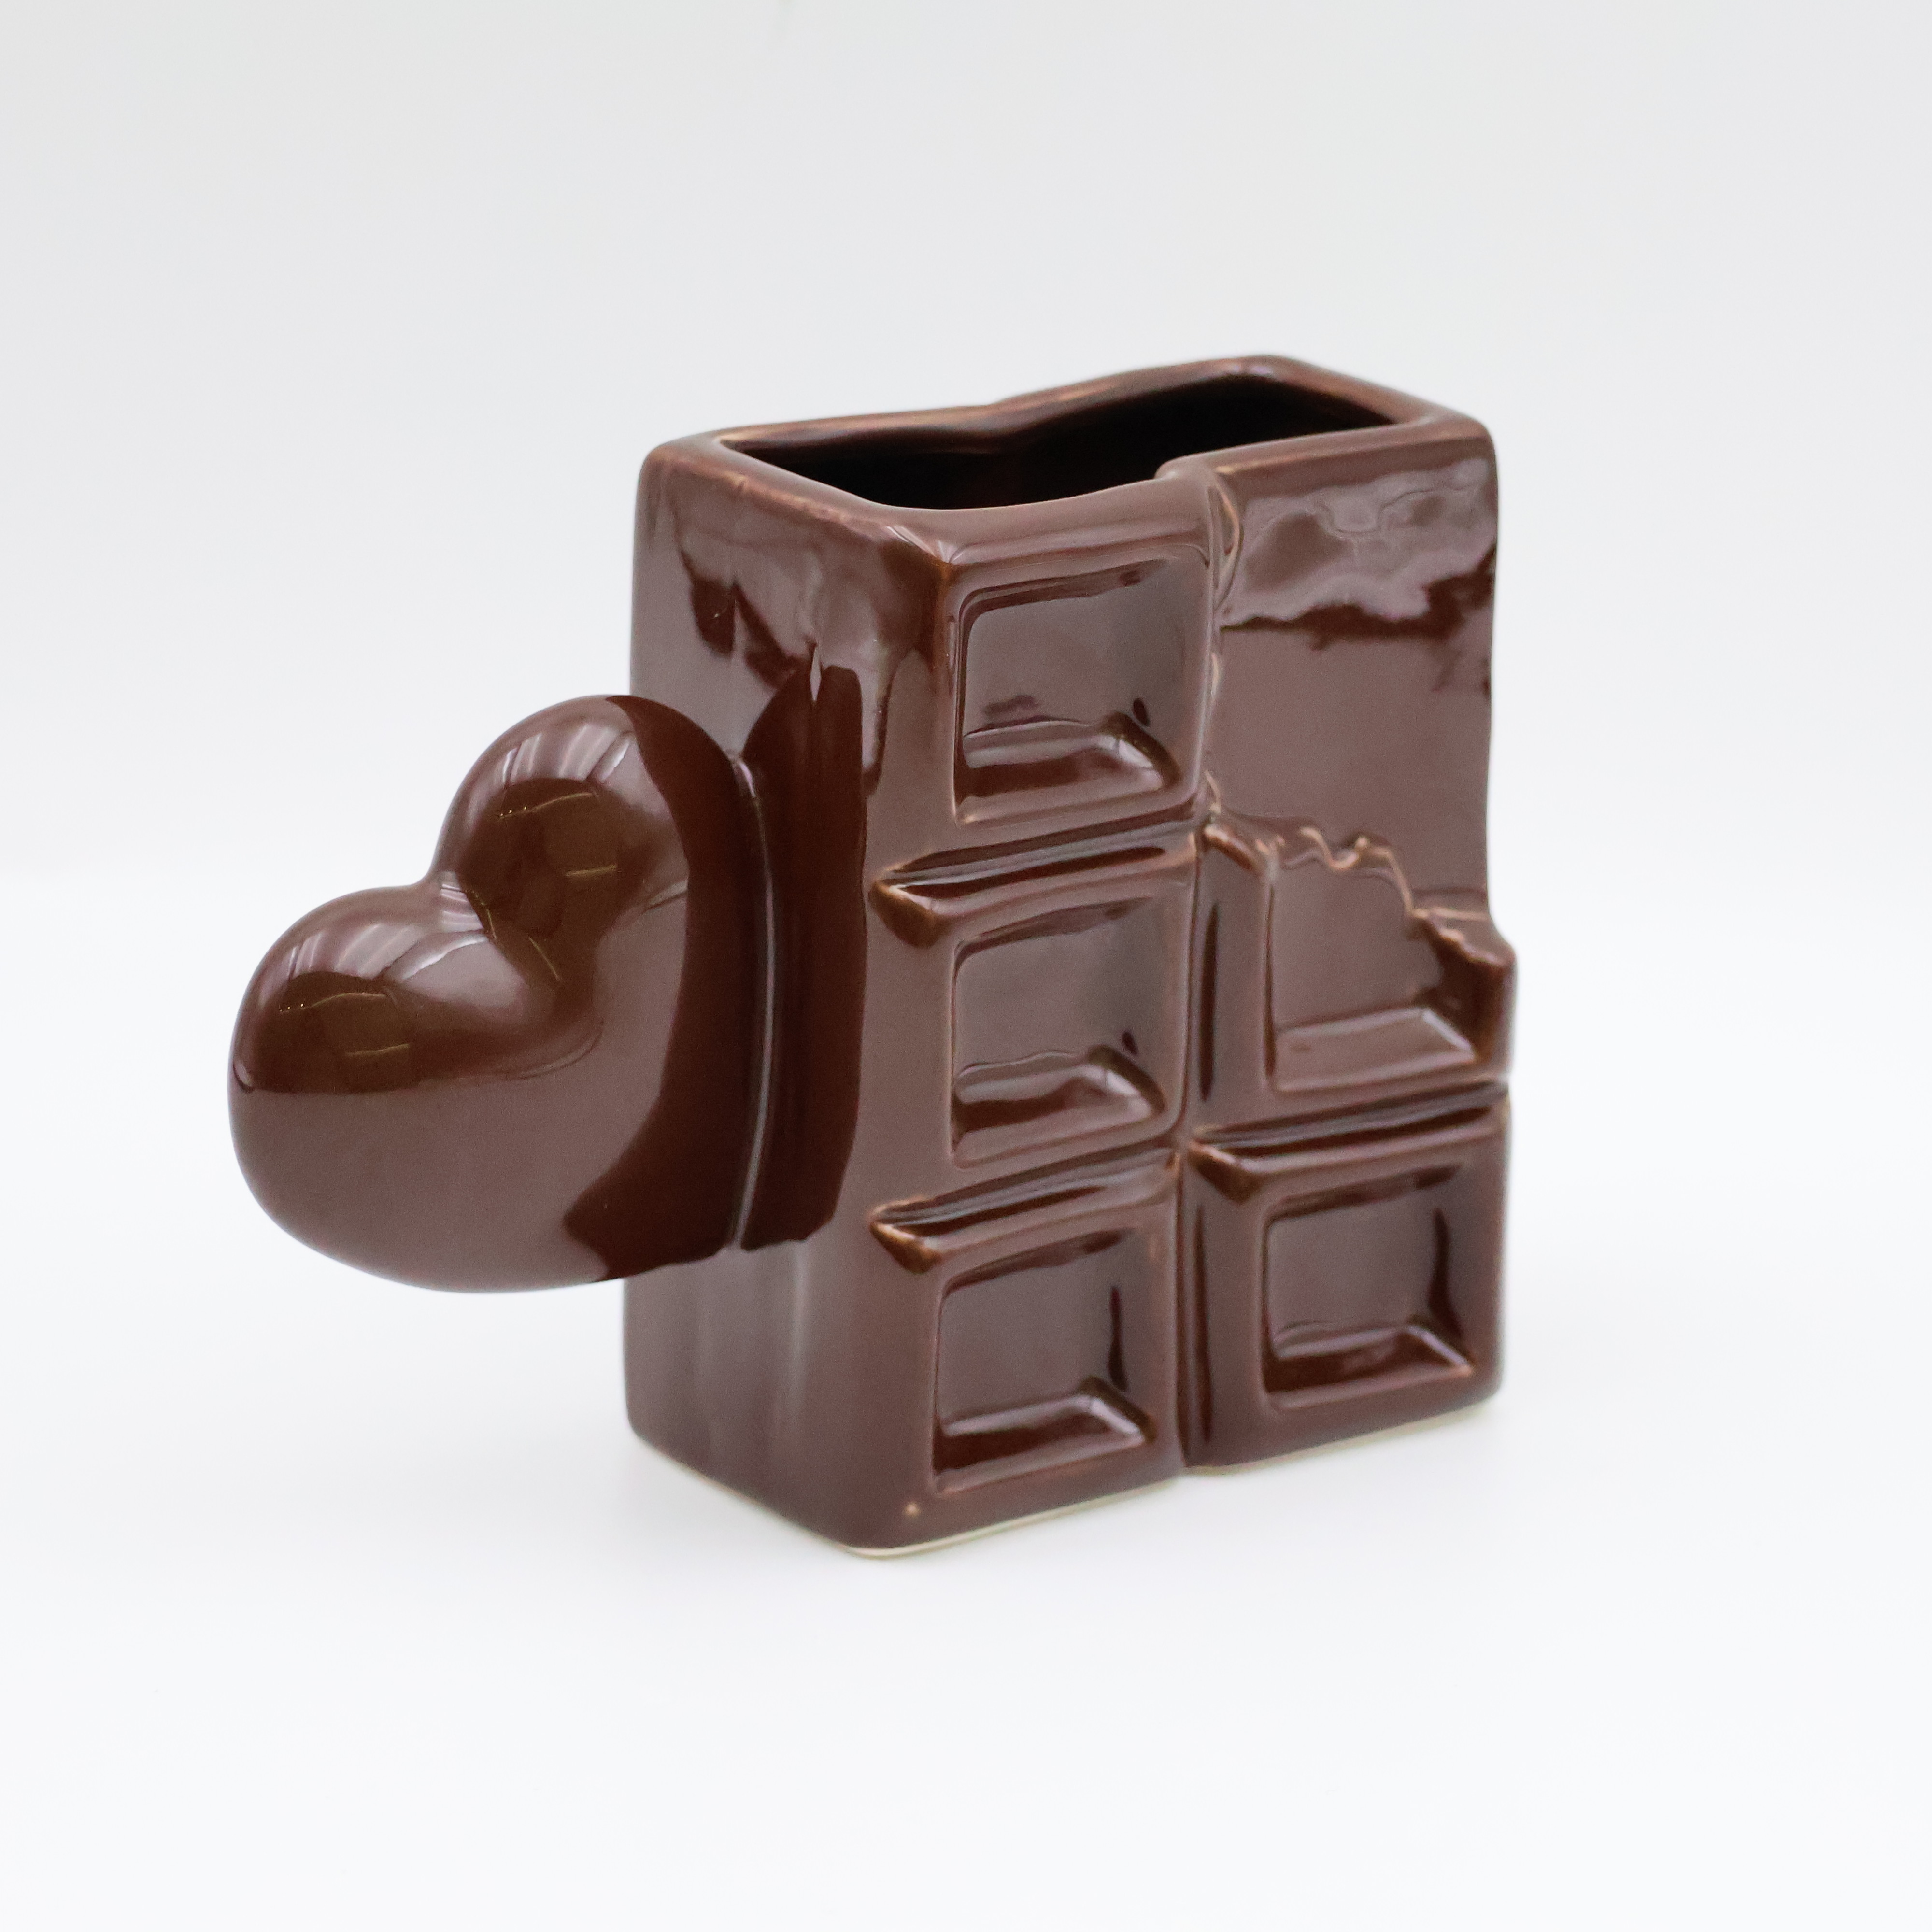 Ceramic Chocolate Mug with Heart Handle